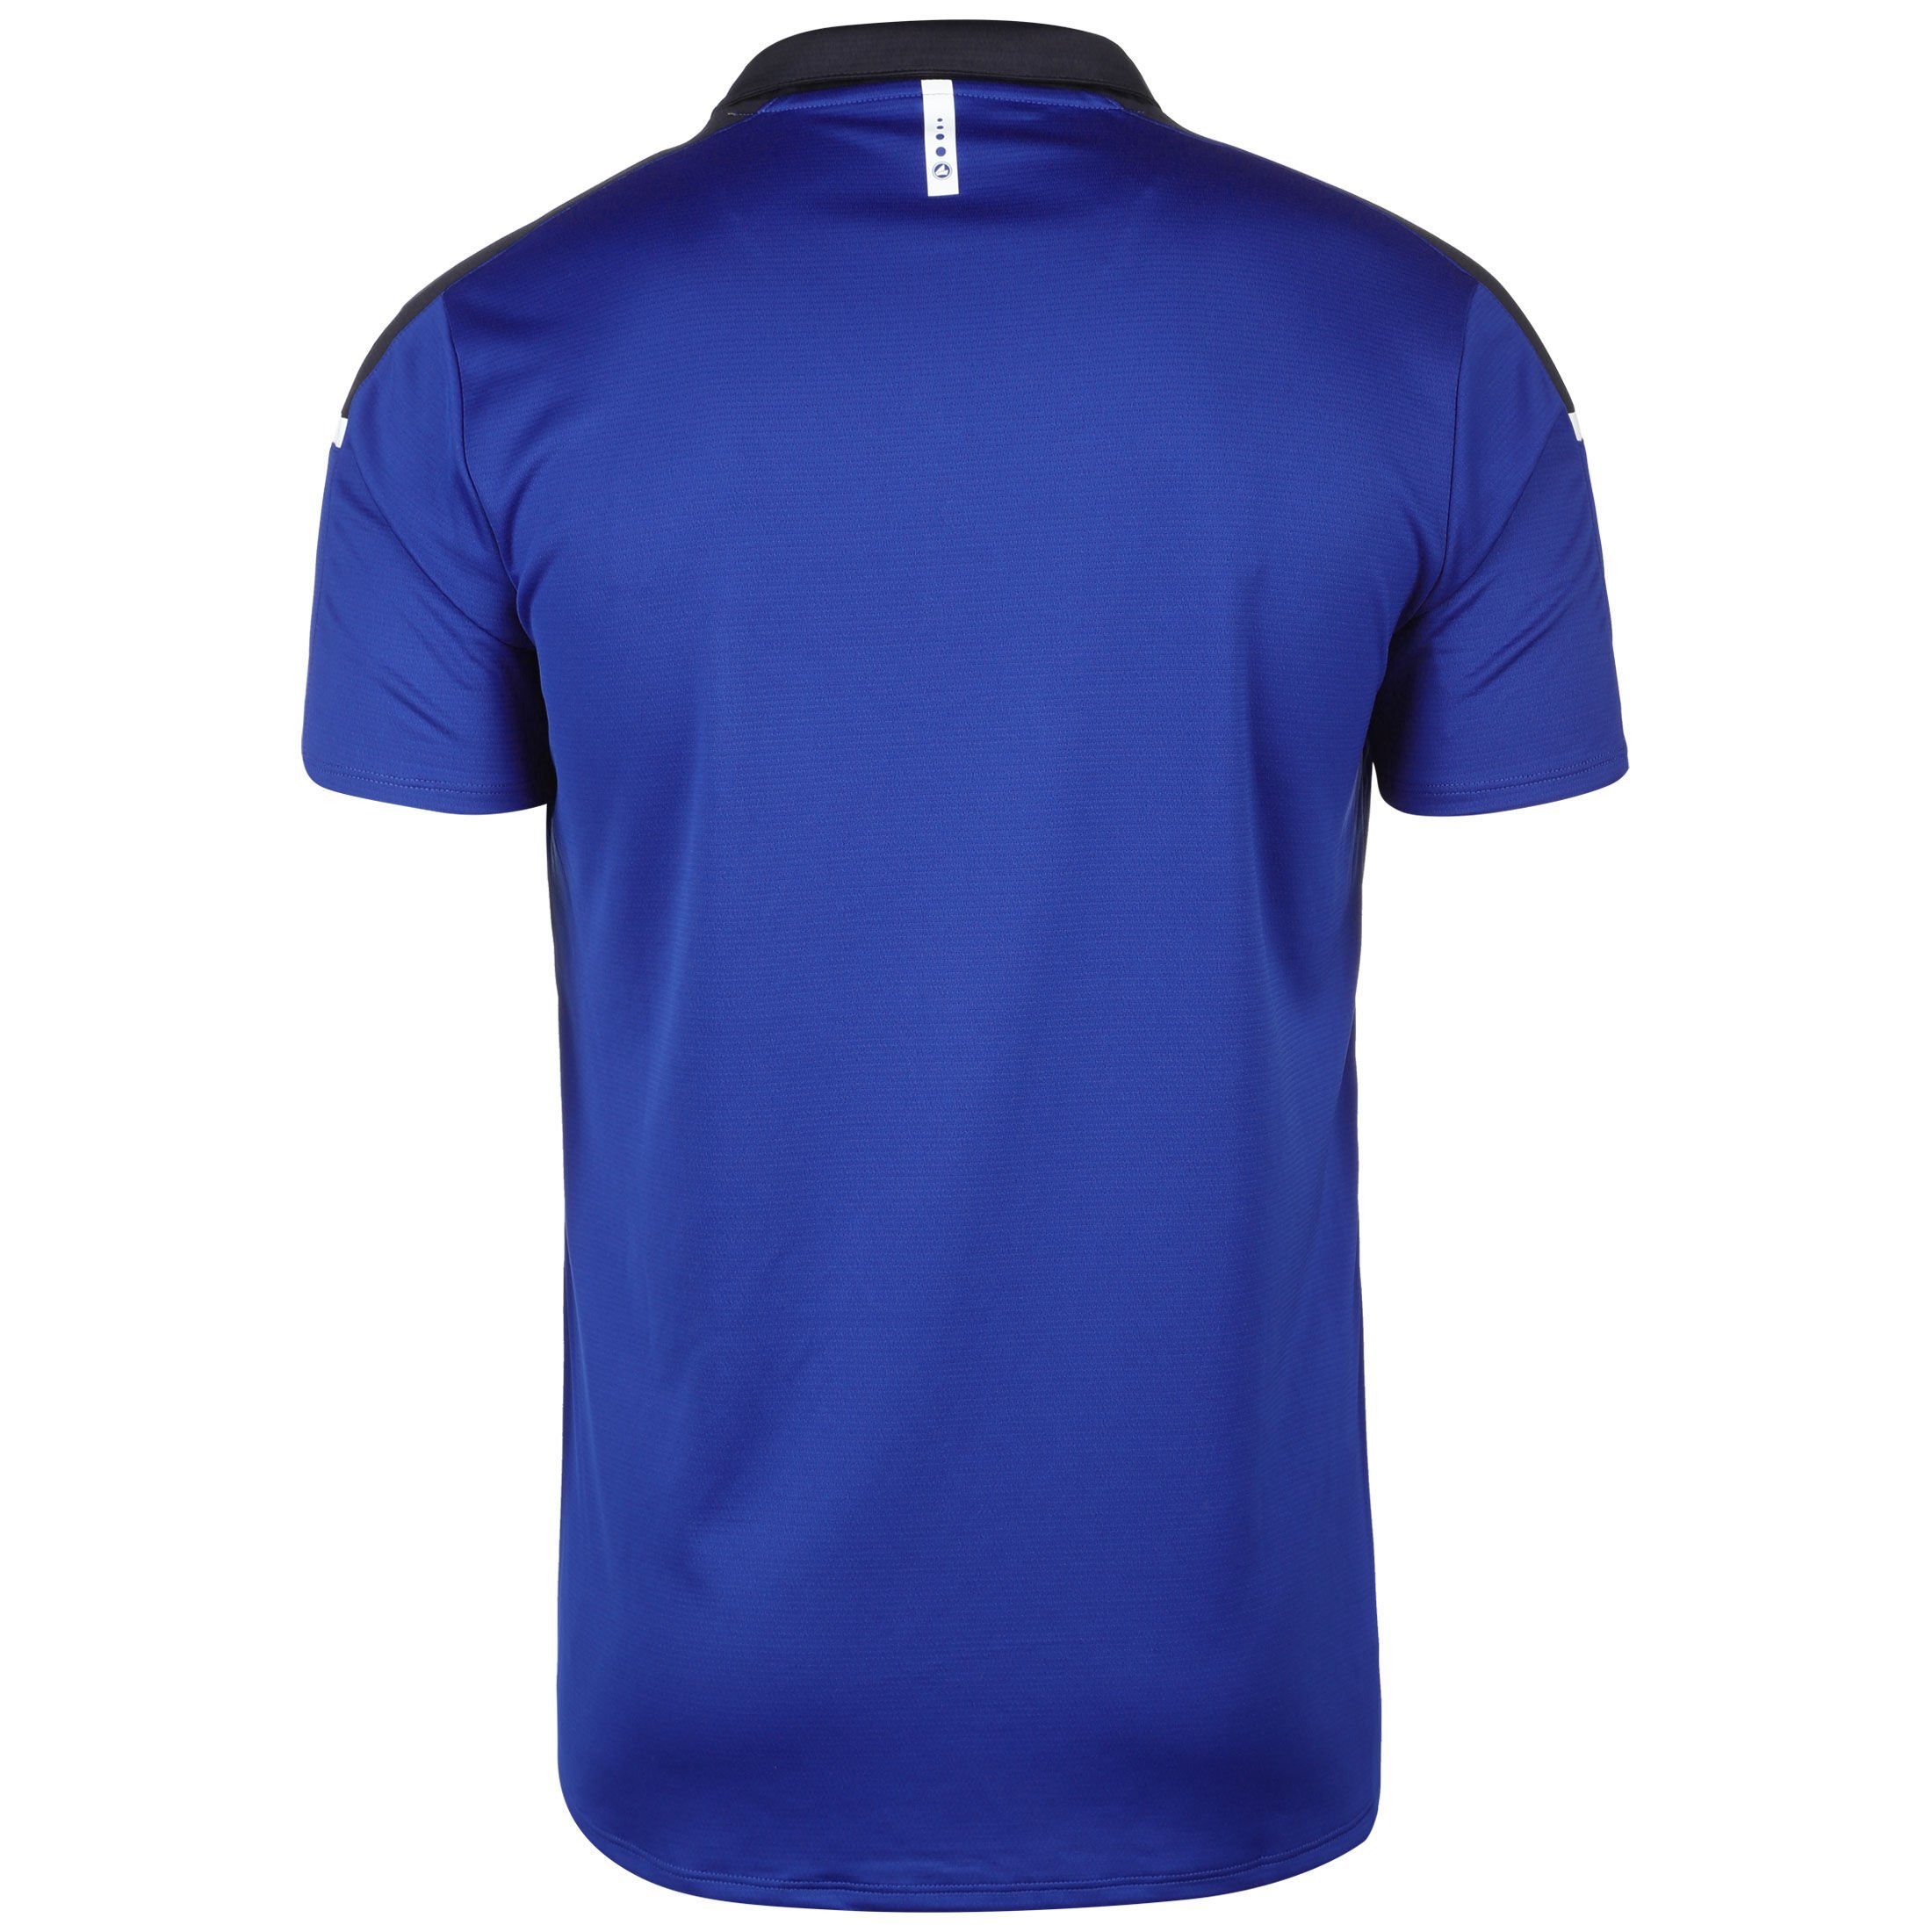 Jako Poloshirt 2.0 blau Herren / Champ dunkelblau Poloshirt